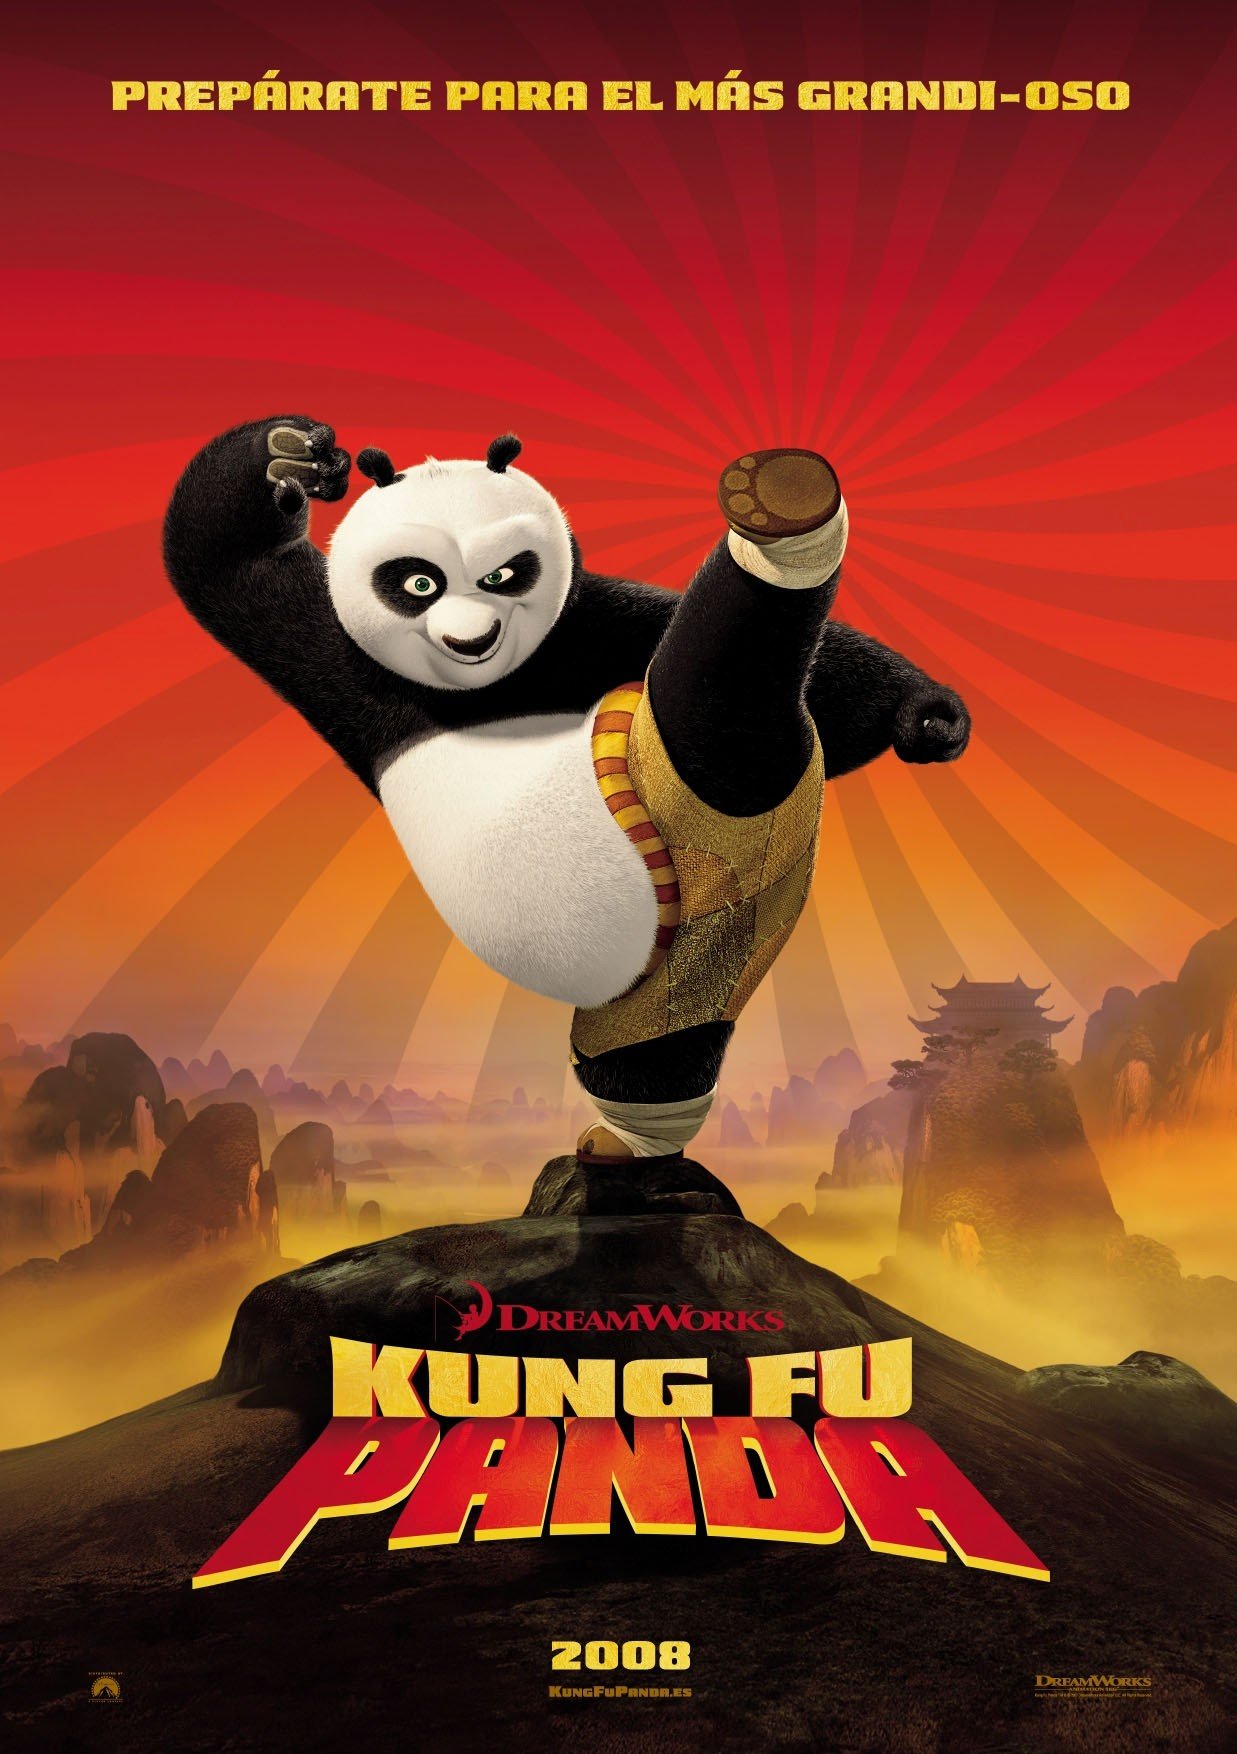 Televisao,series e games: Kung fu panda